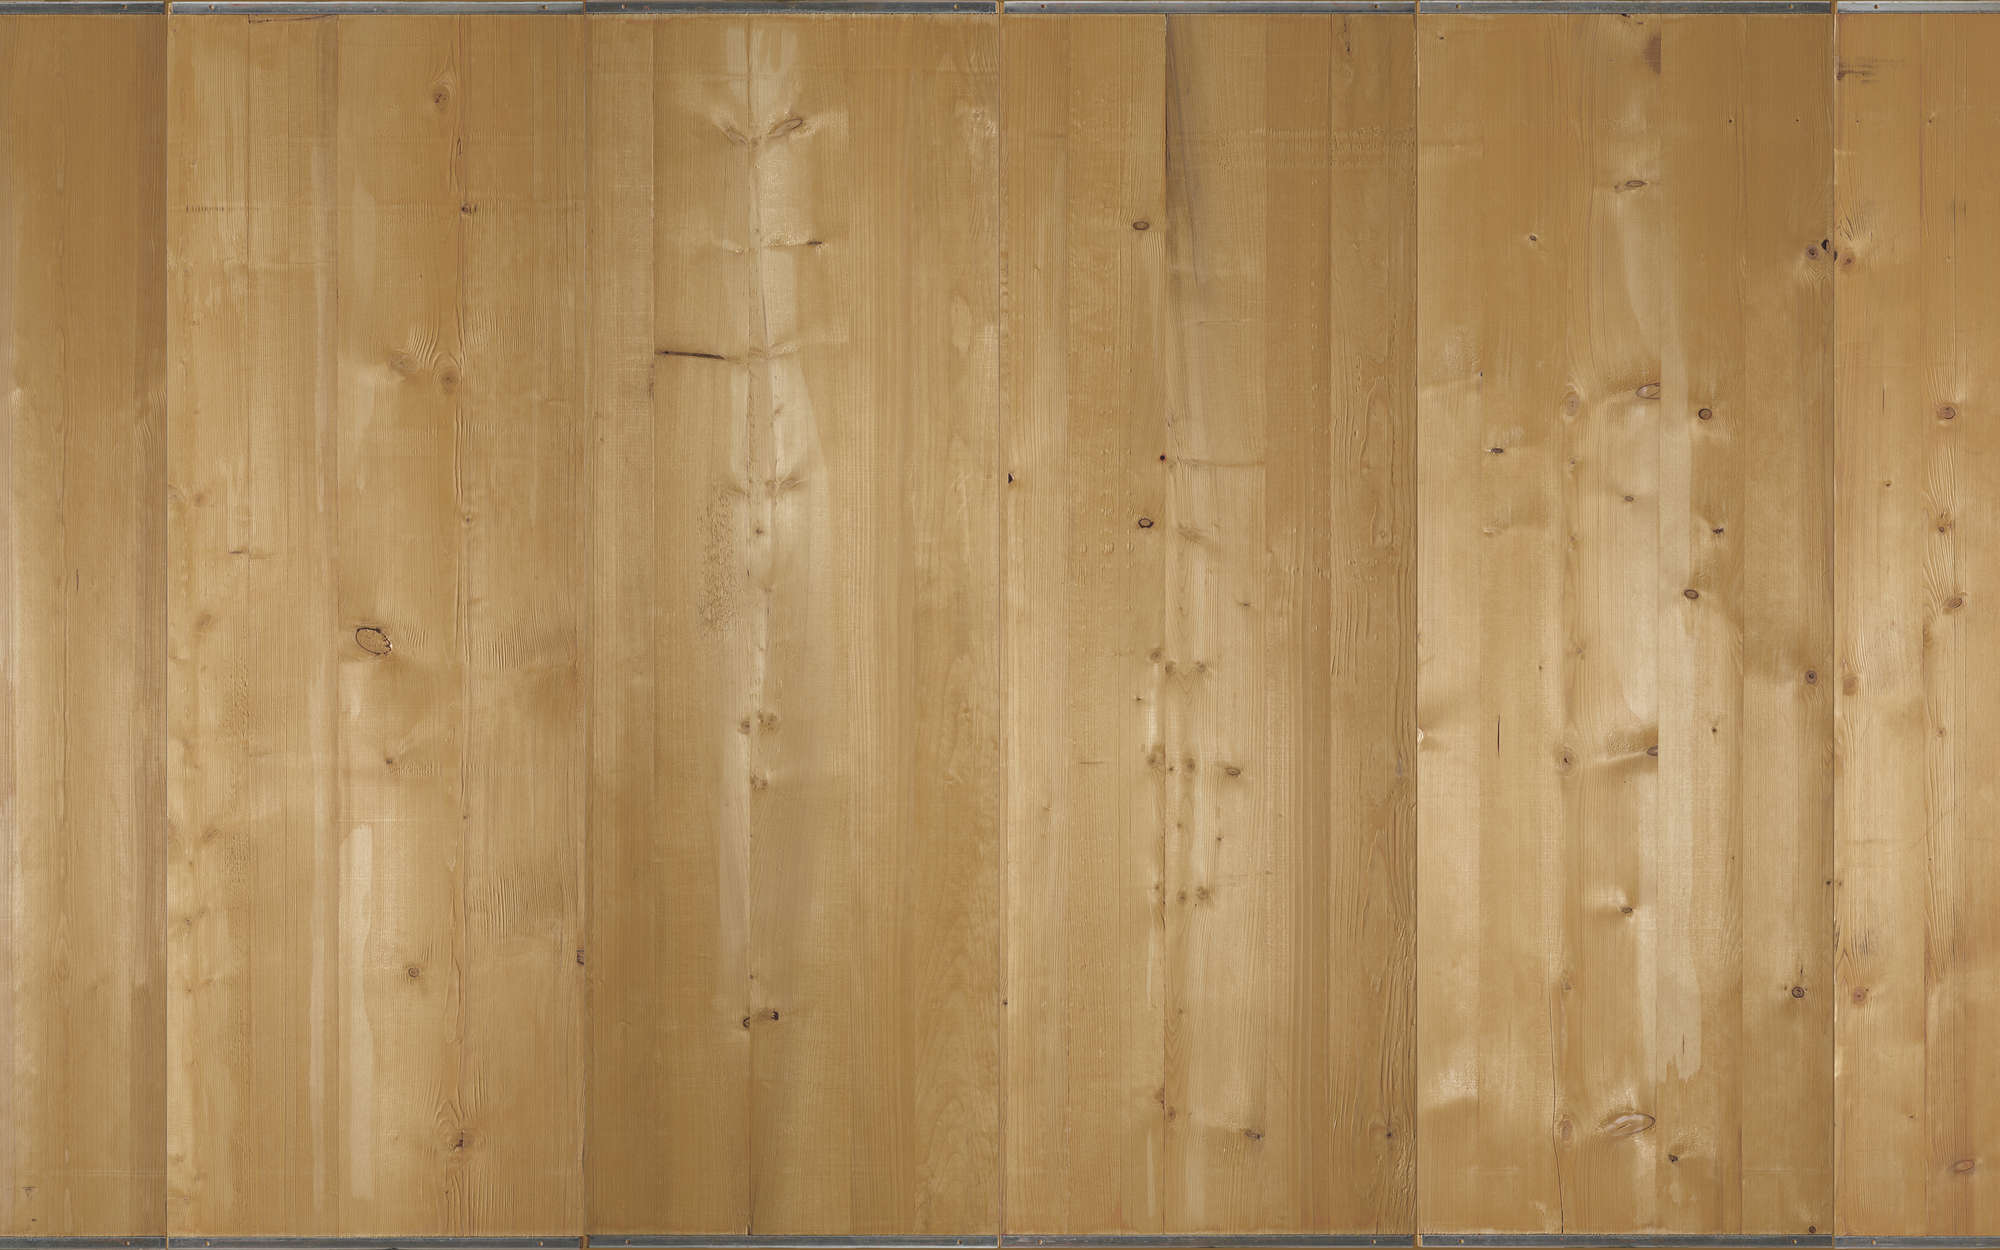             Fototapete helle Holzbretter – Strukturiertes Vlies
        